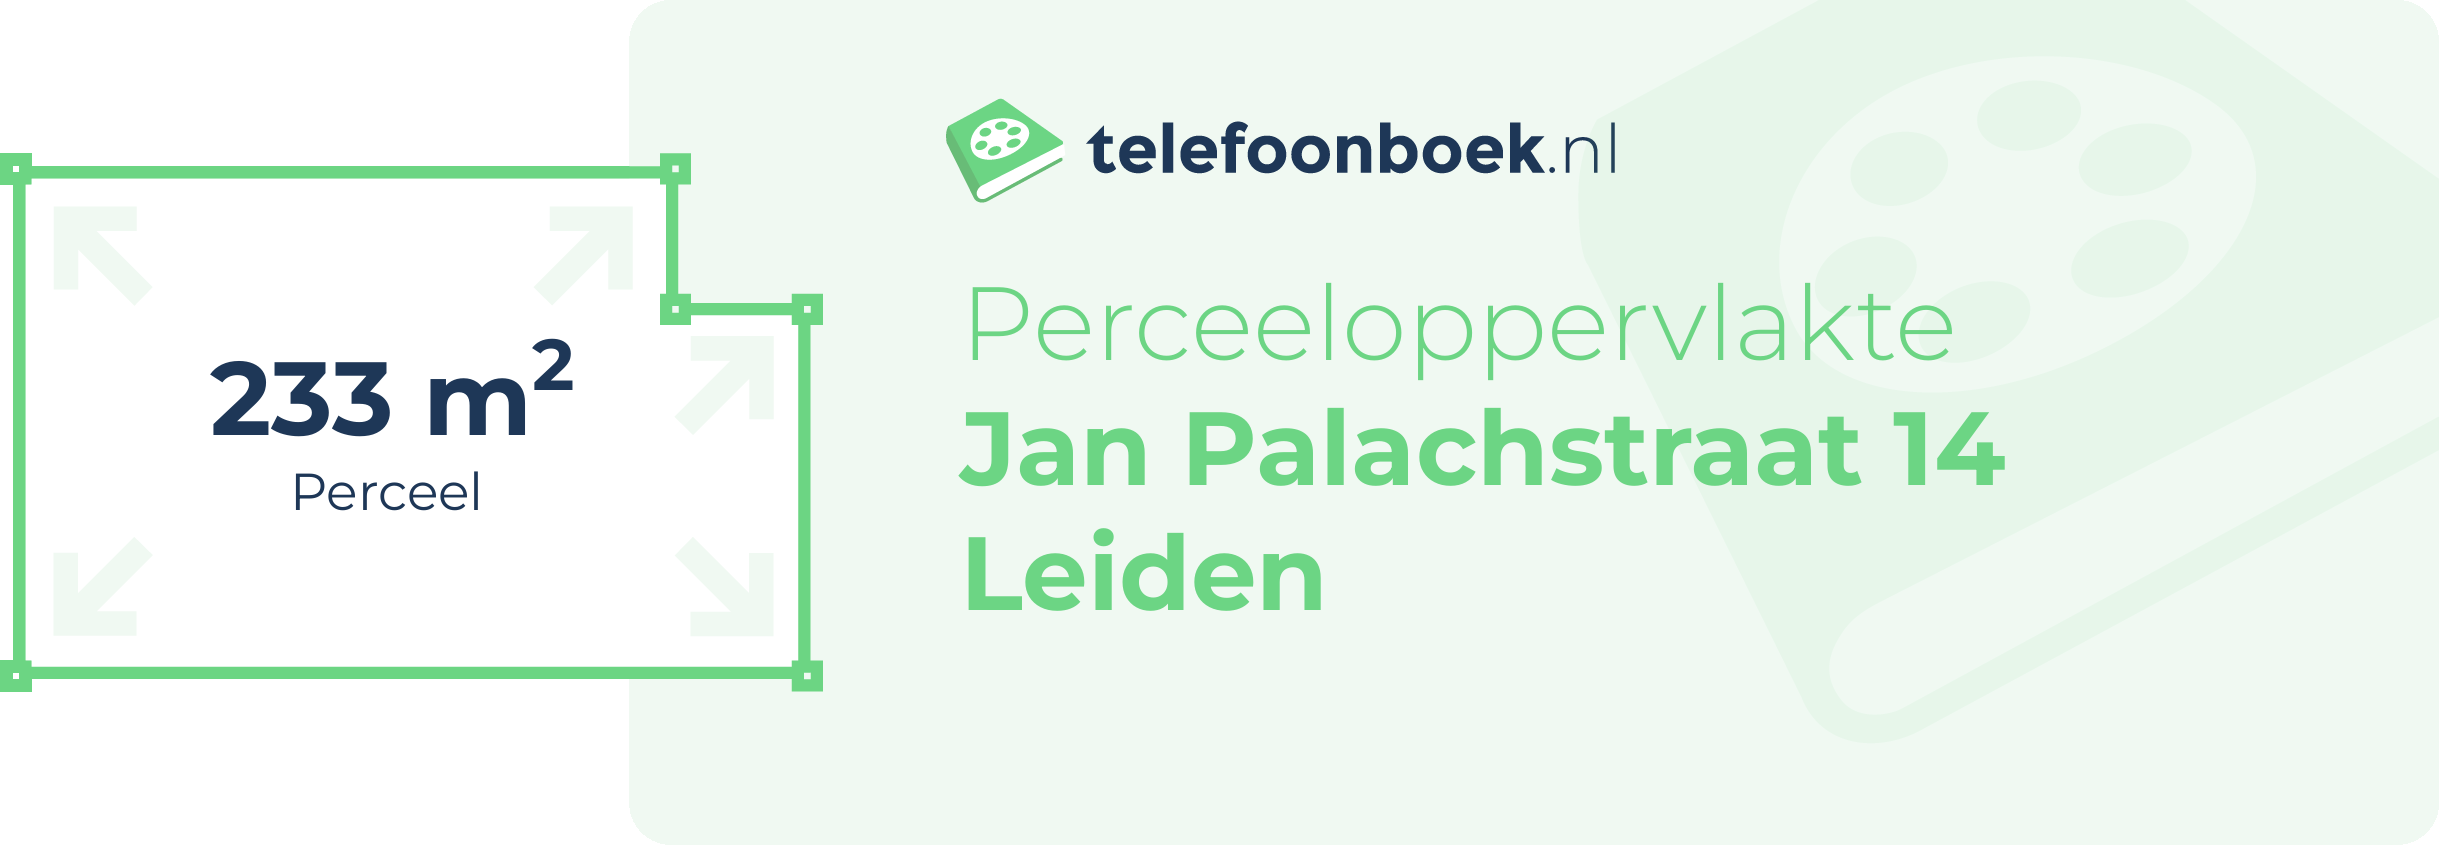 Perceeloppervlakte Jan Palachstraat 14 Leiden